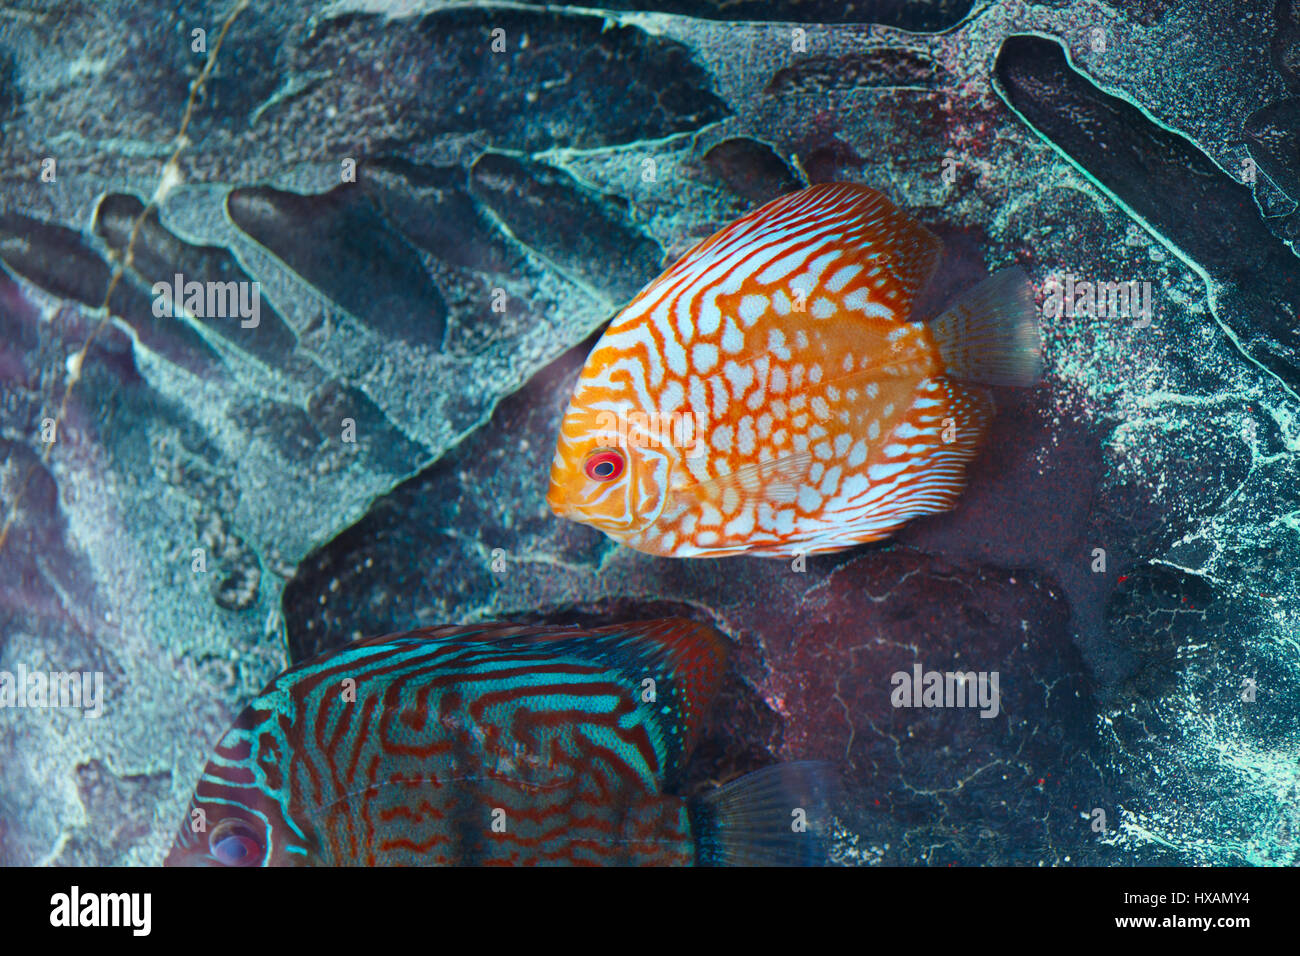 Aquarium fish discus in orange color from Amazon river basin in South America. Stock Photo